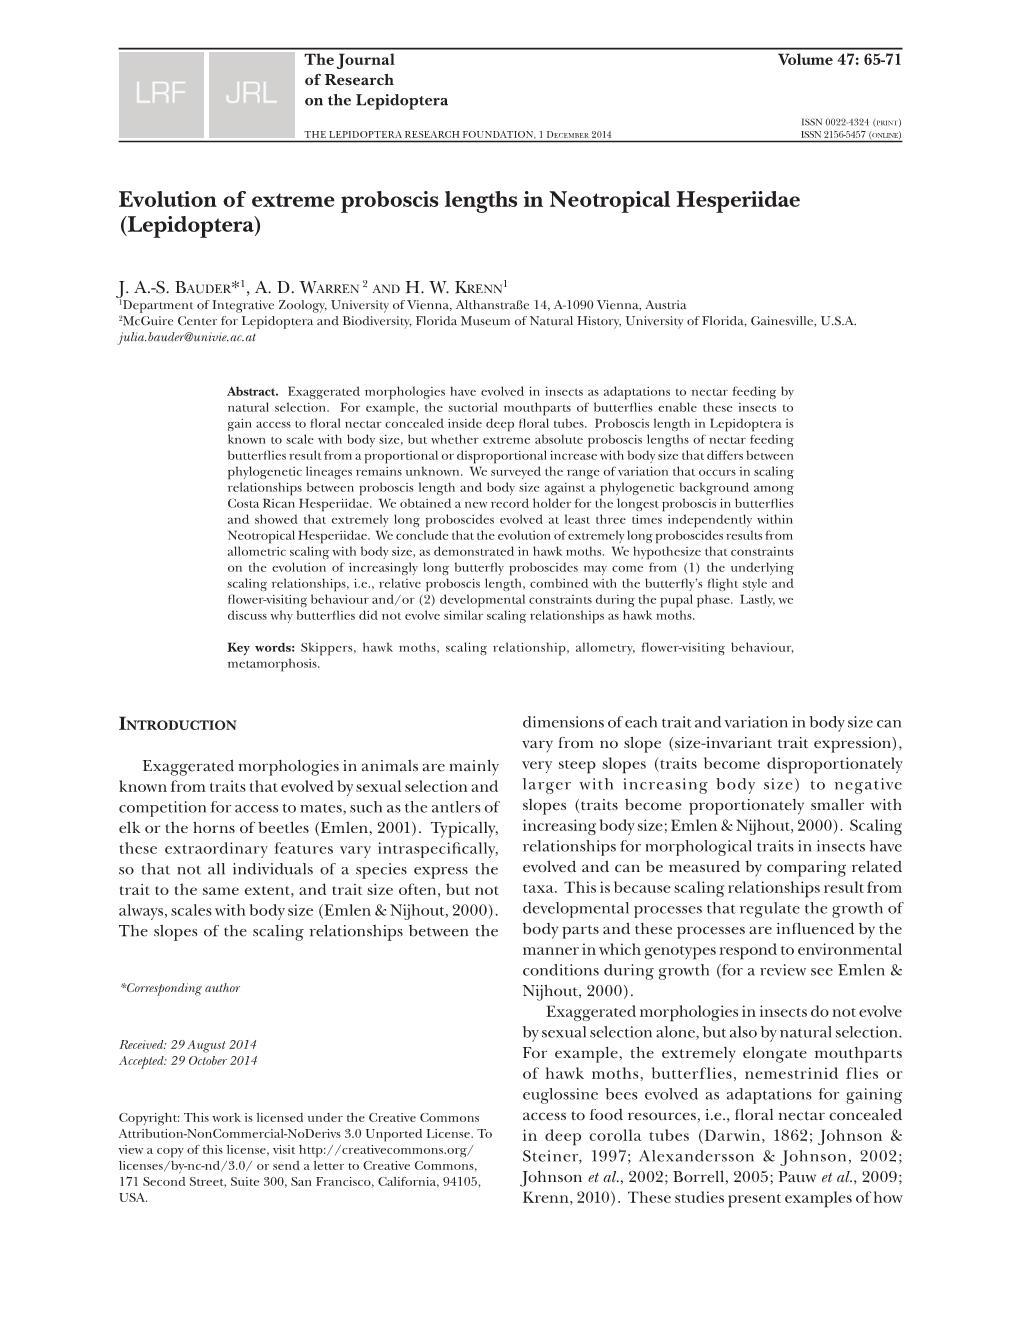 Evolution of Extreme Proboscis Lengths in Neotropical Hesperiidae (Lepidoptera)